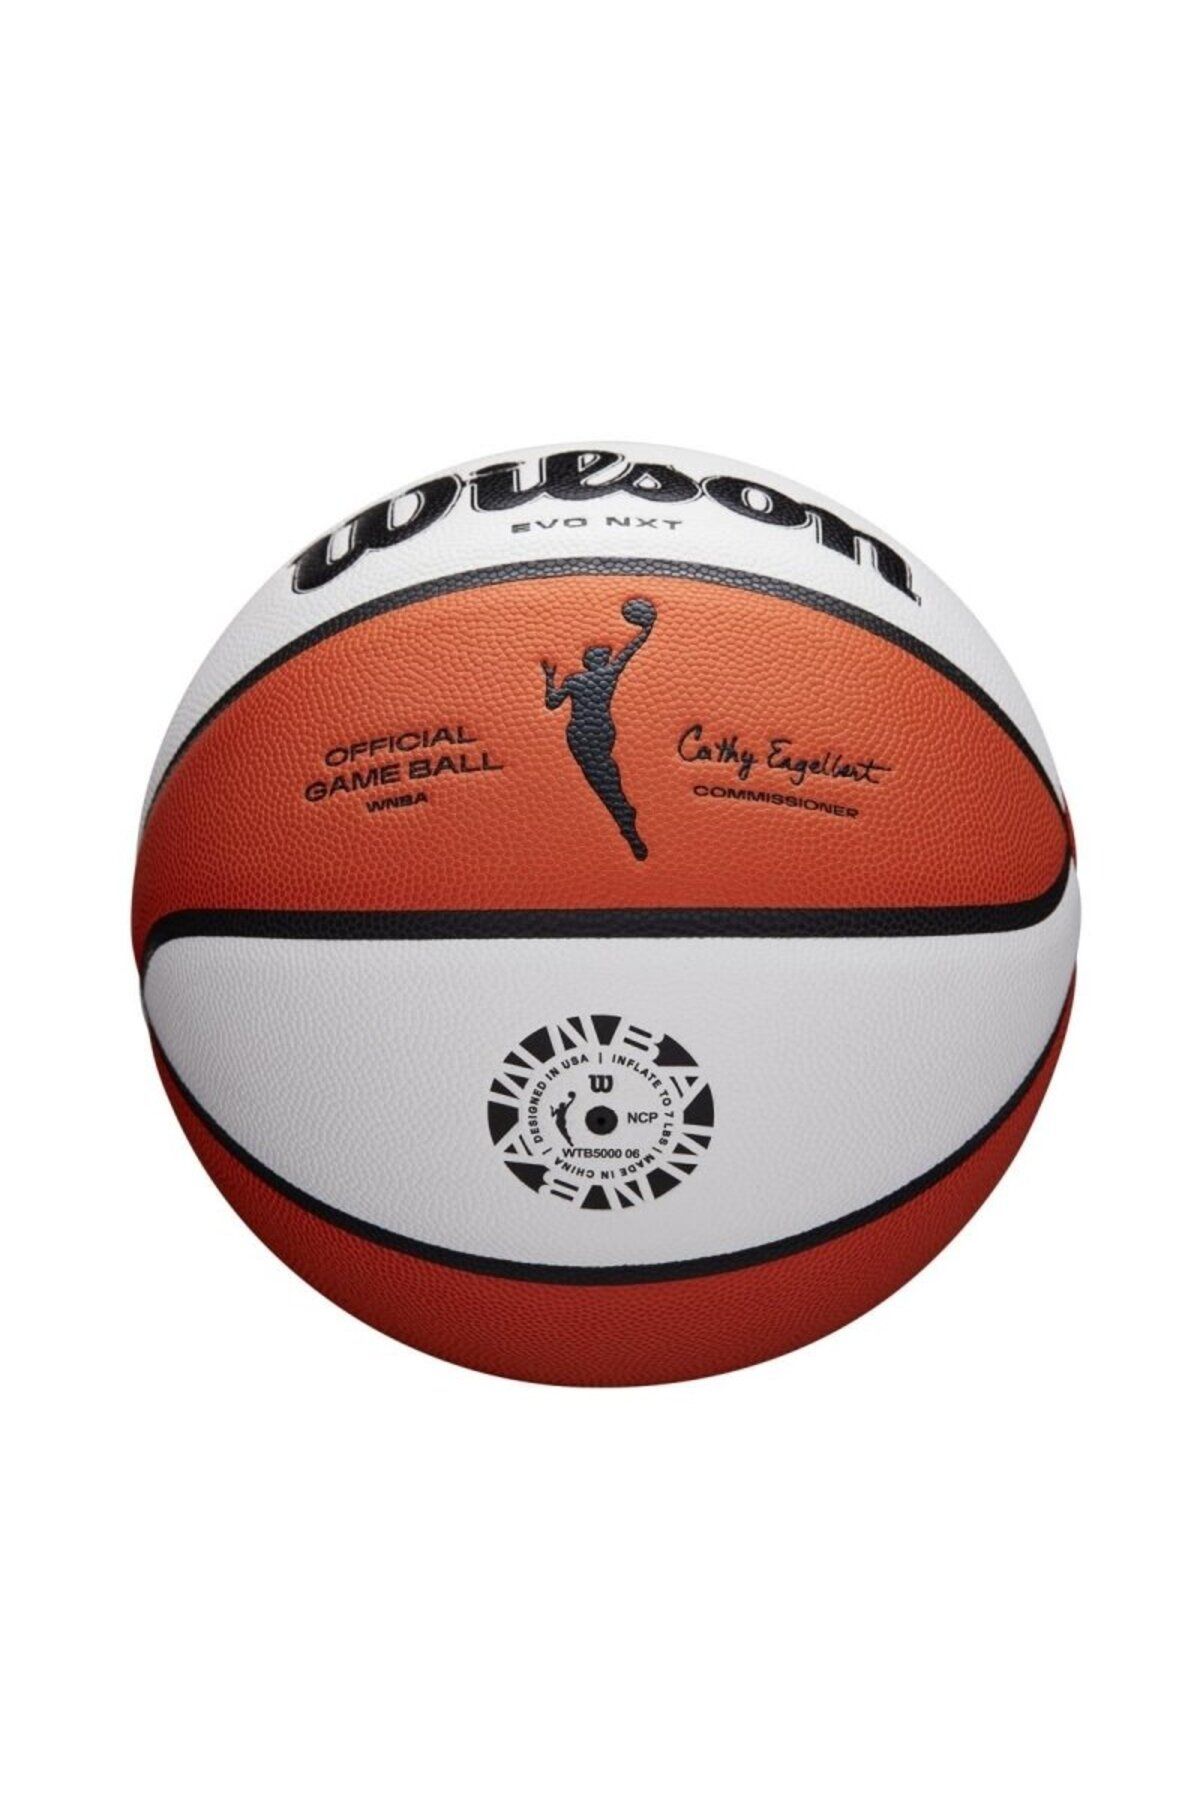 Wilson Wnba Offical Game Basketbol Topu Size 6 (wtb5000xb06)